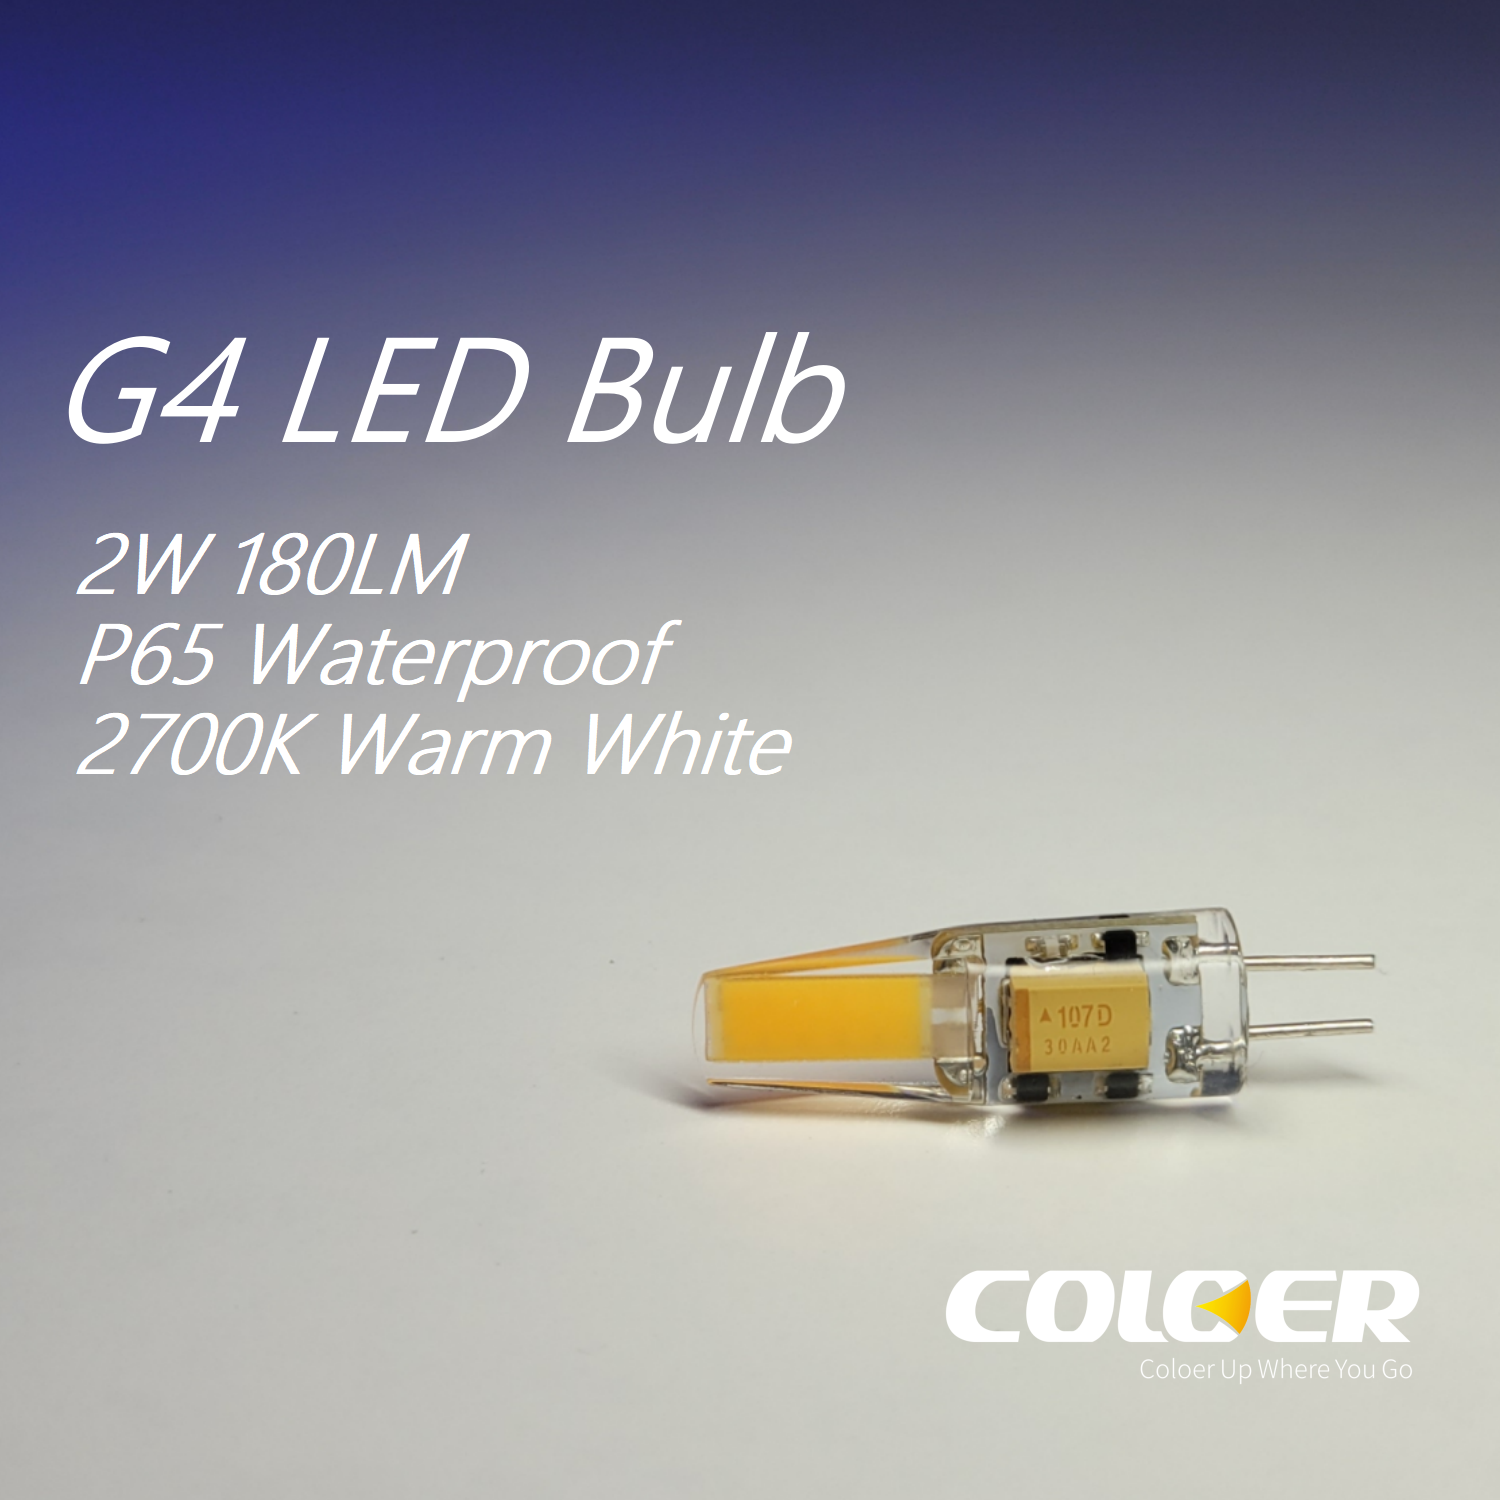 2W G4 LED Bulb 2700K Warm White P65 Waterproof